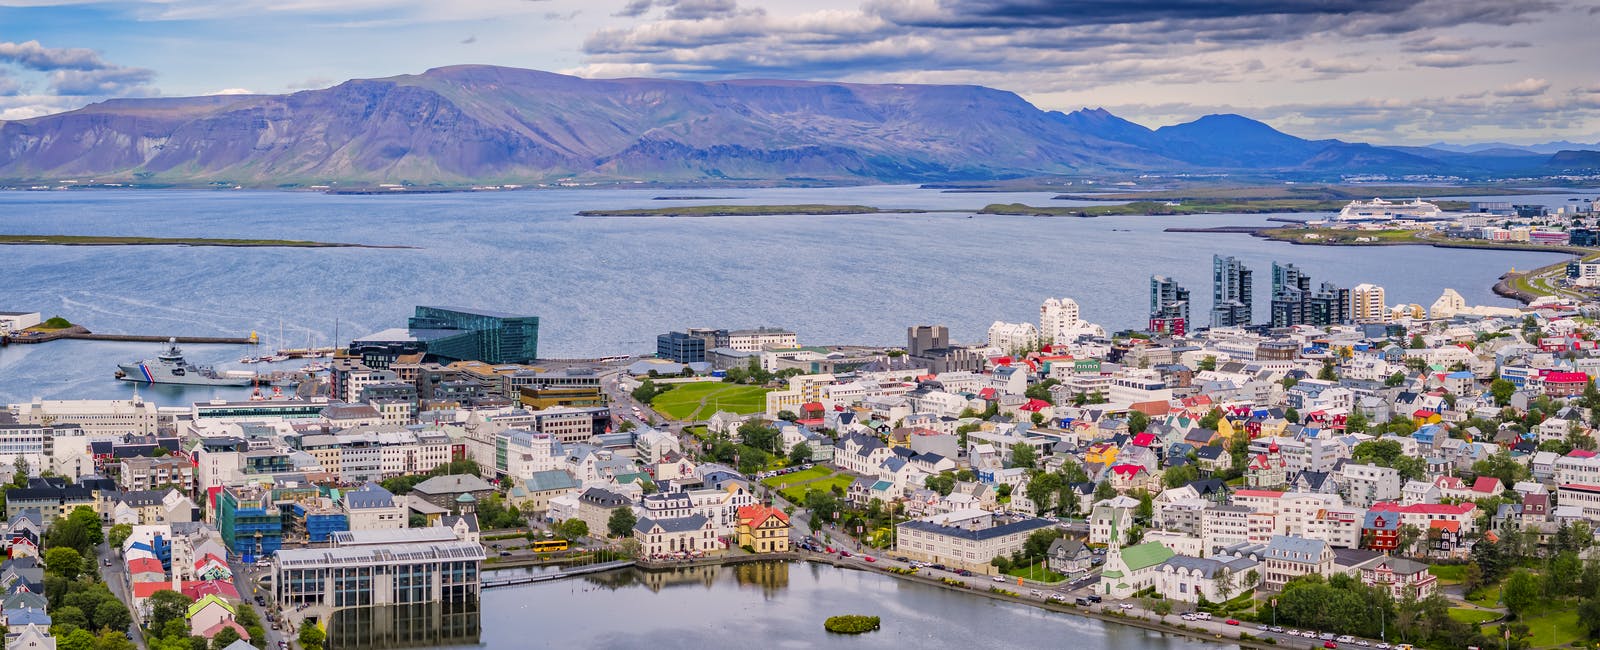 Esjan view from Reykjavik